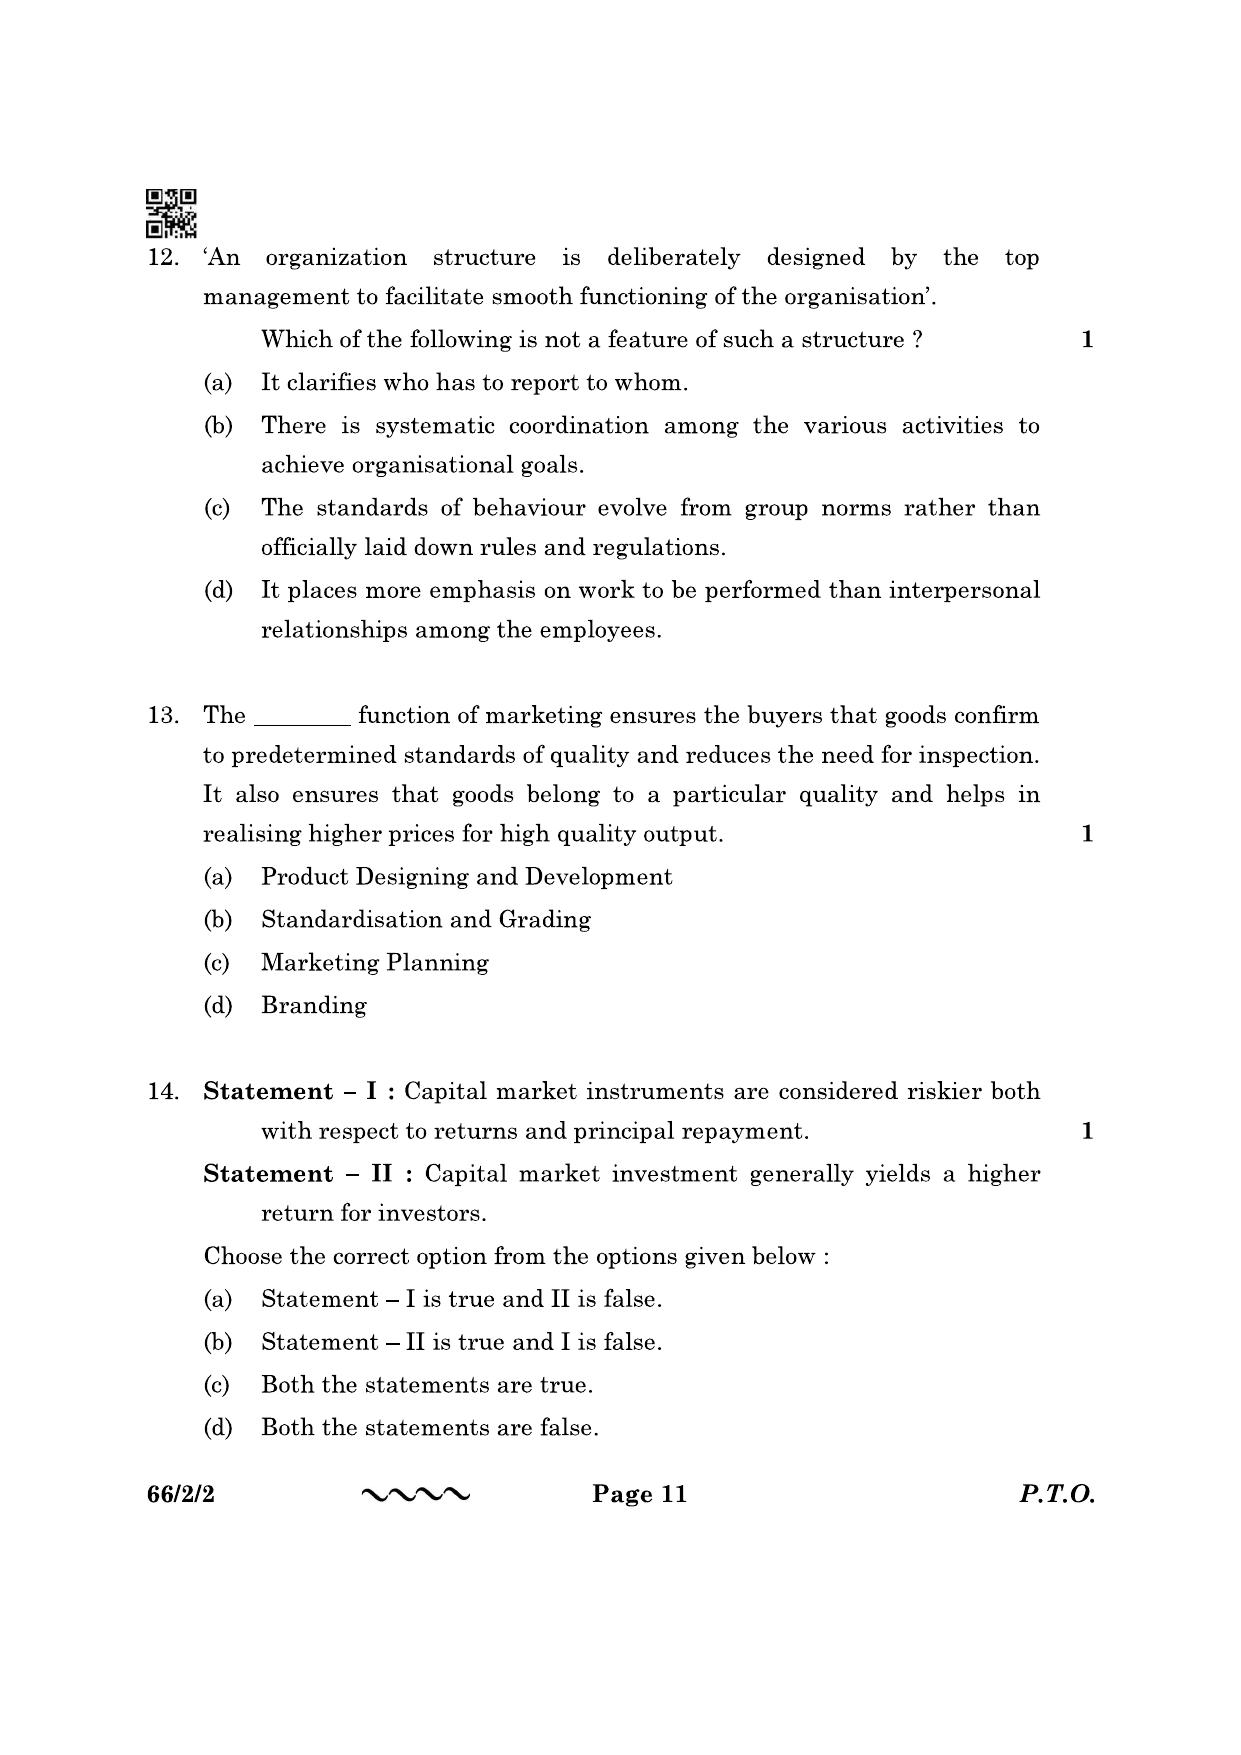 CBSE Class 12 66-2-2 Business Studies 2023 Question Paper - Page 11